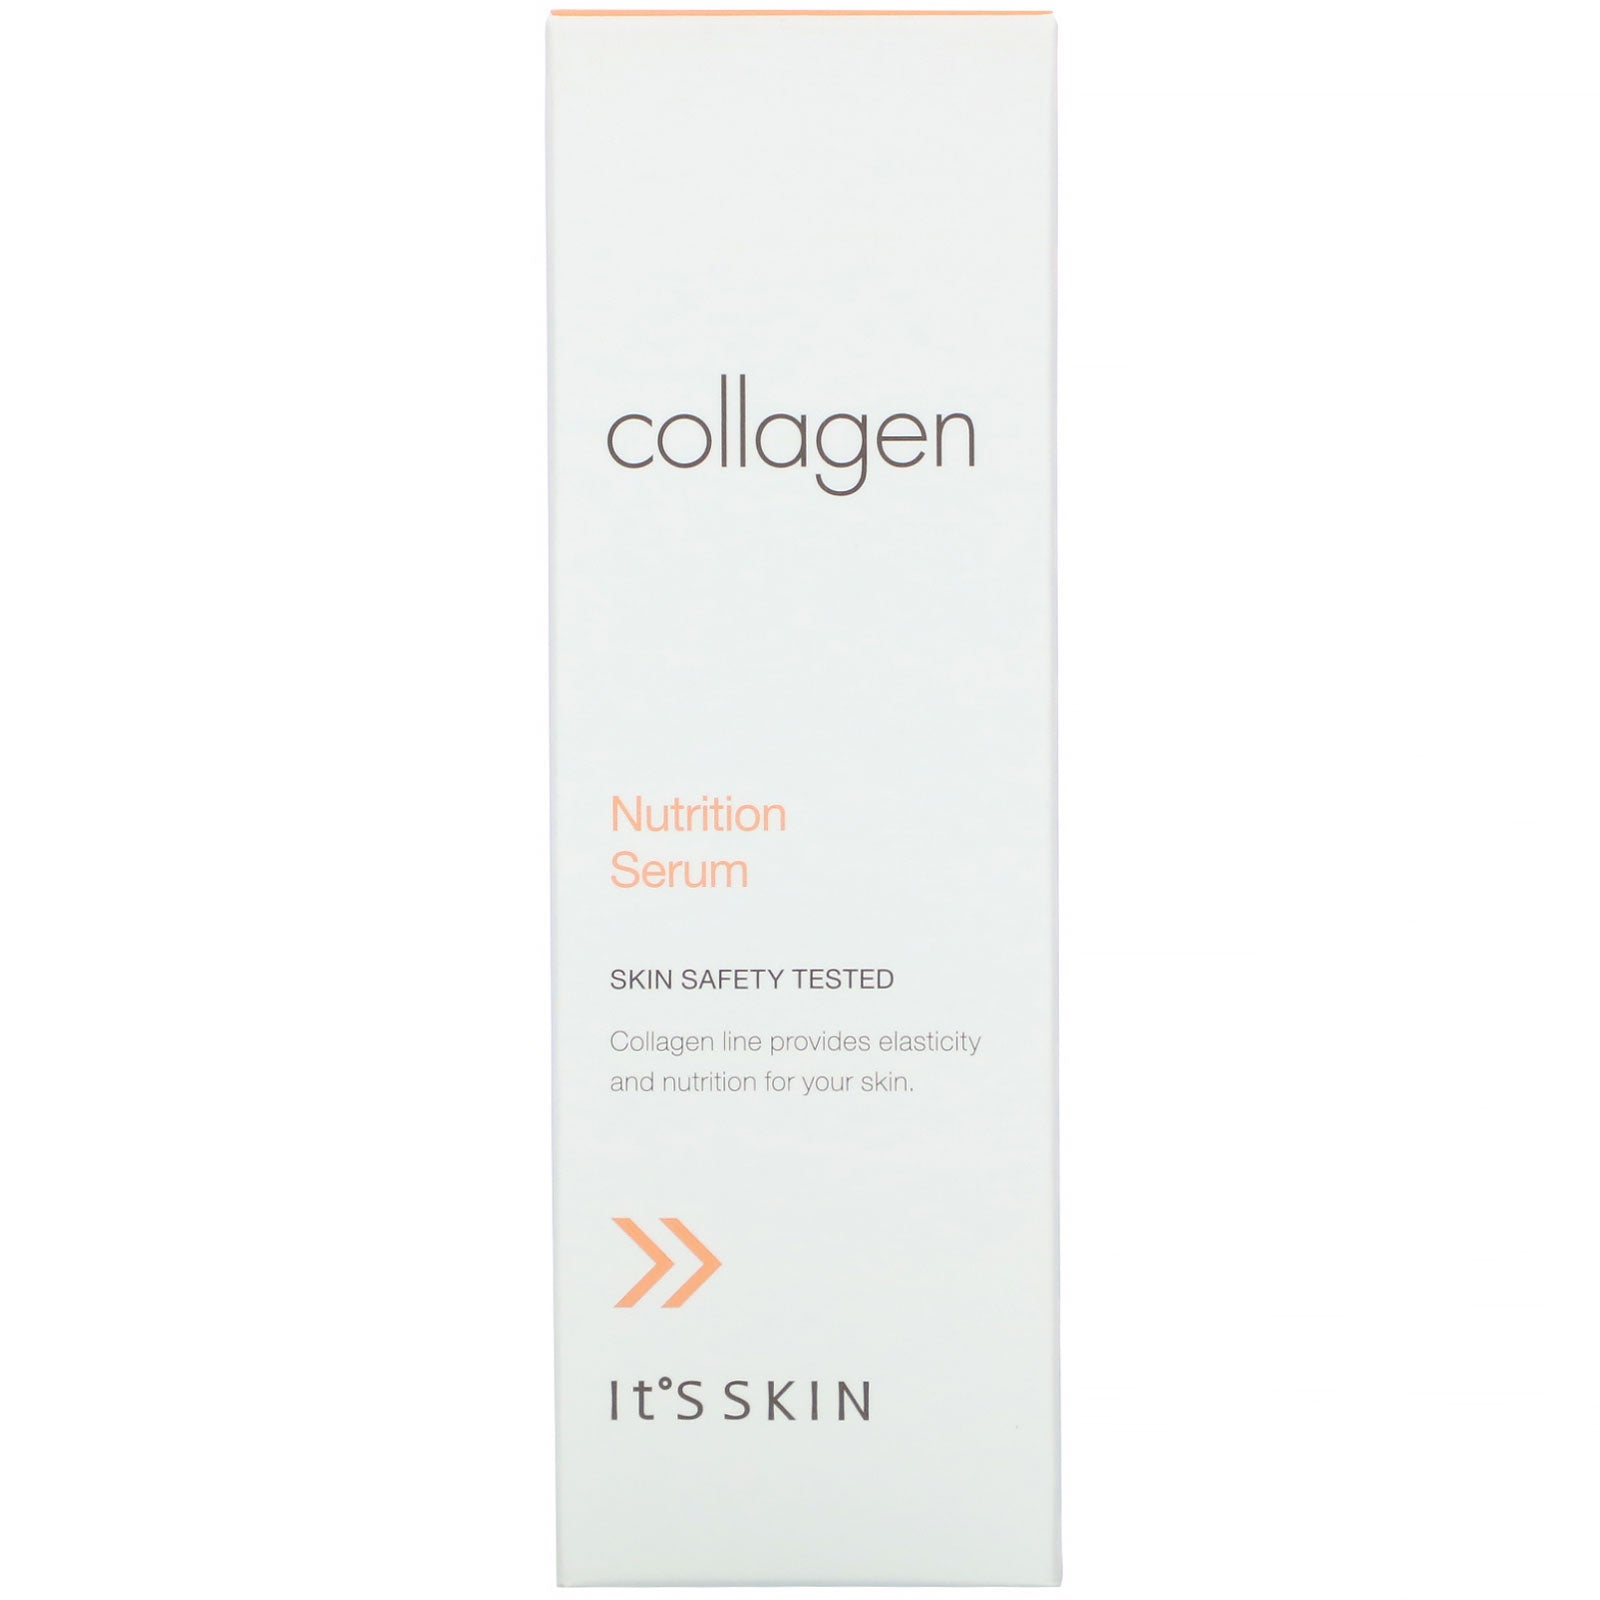 It's skin Collagen Nutrition Toner تونر الكولاجين للبشرة